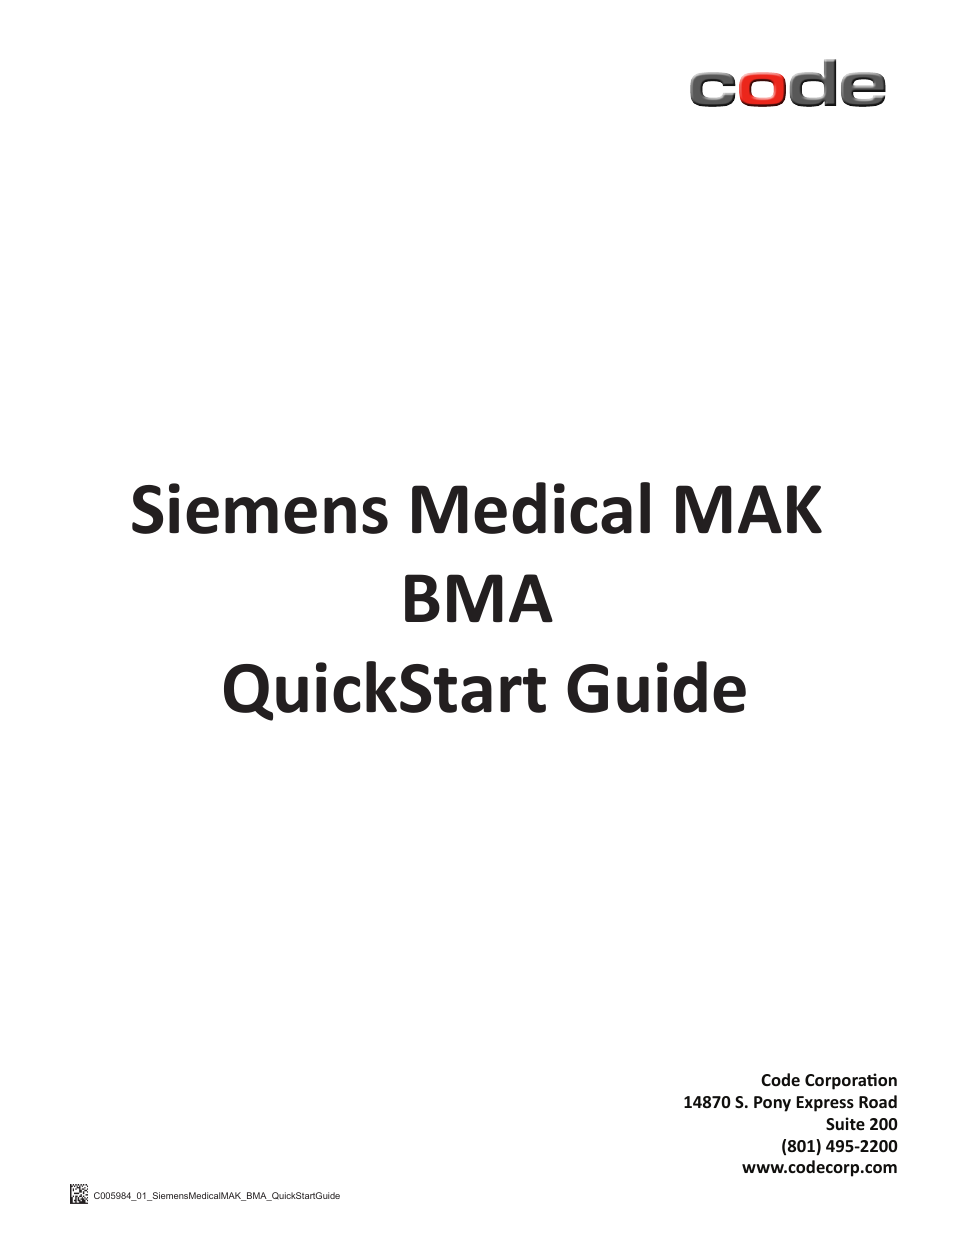 CR2500 Siemens Medical MAK HIS Quick Start